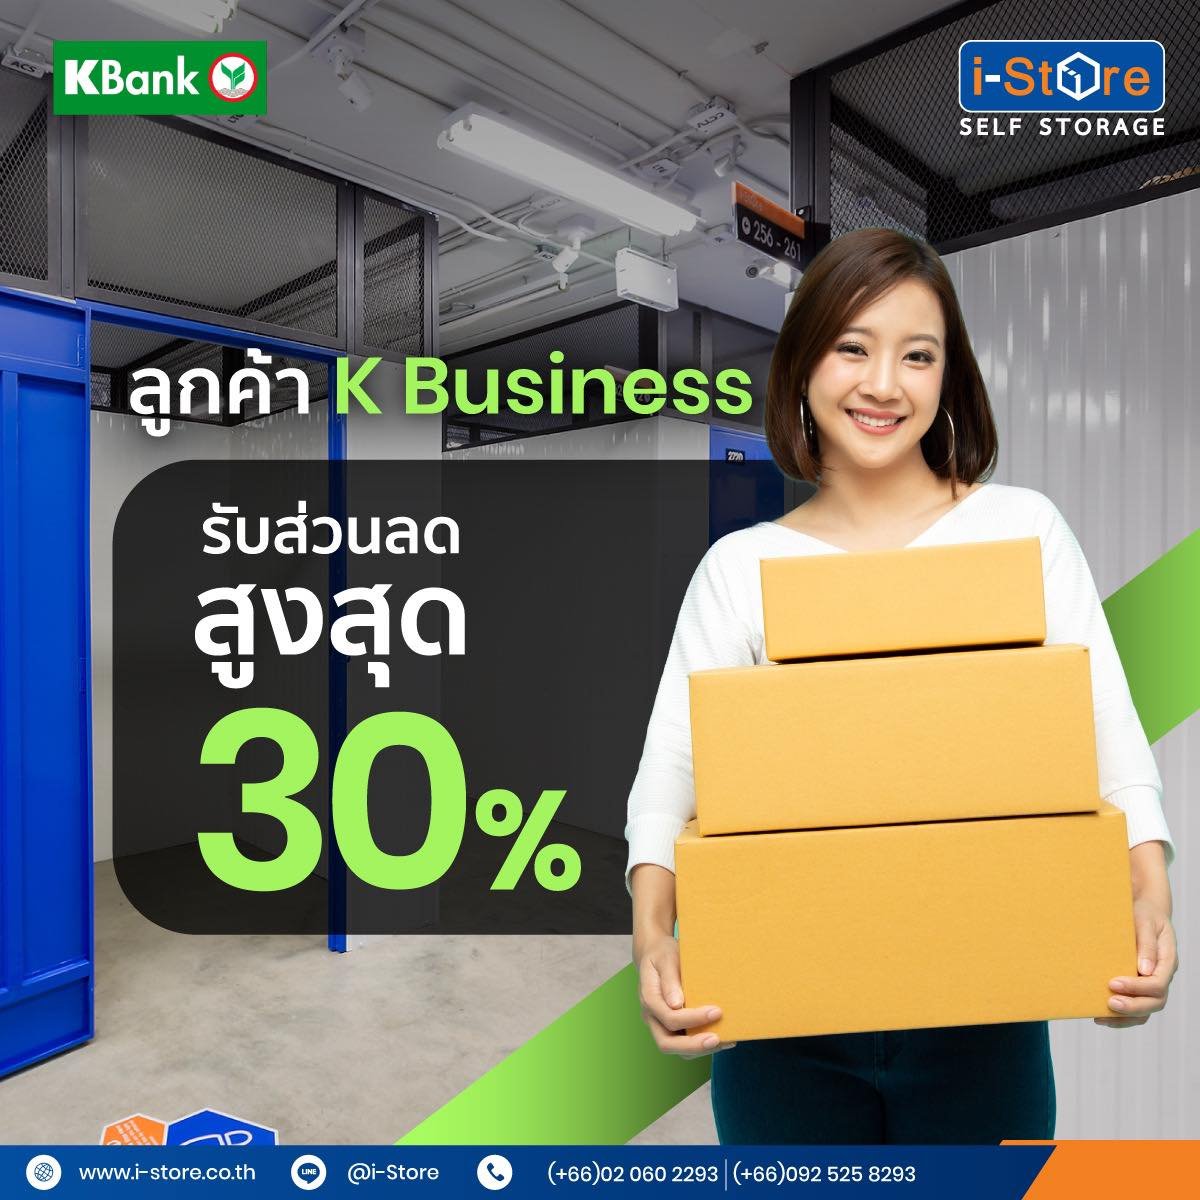 Promotion for K Business KBank.jpg